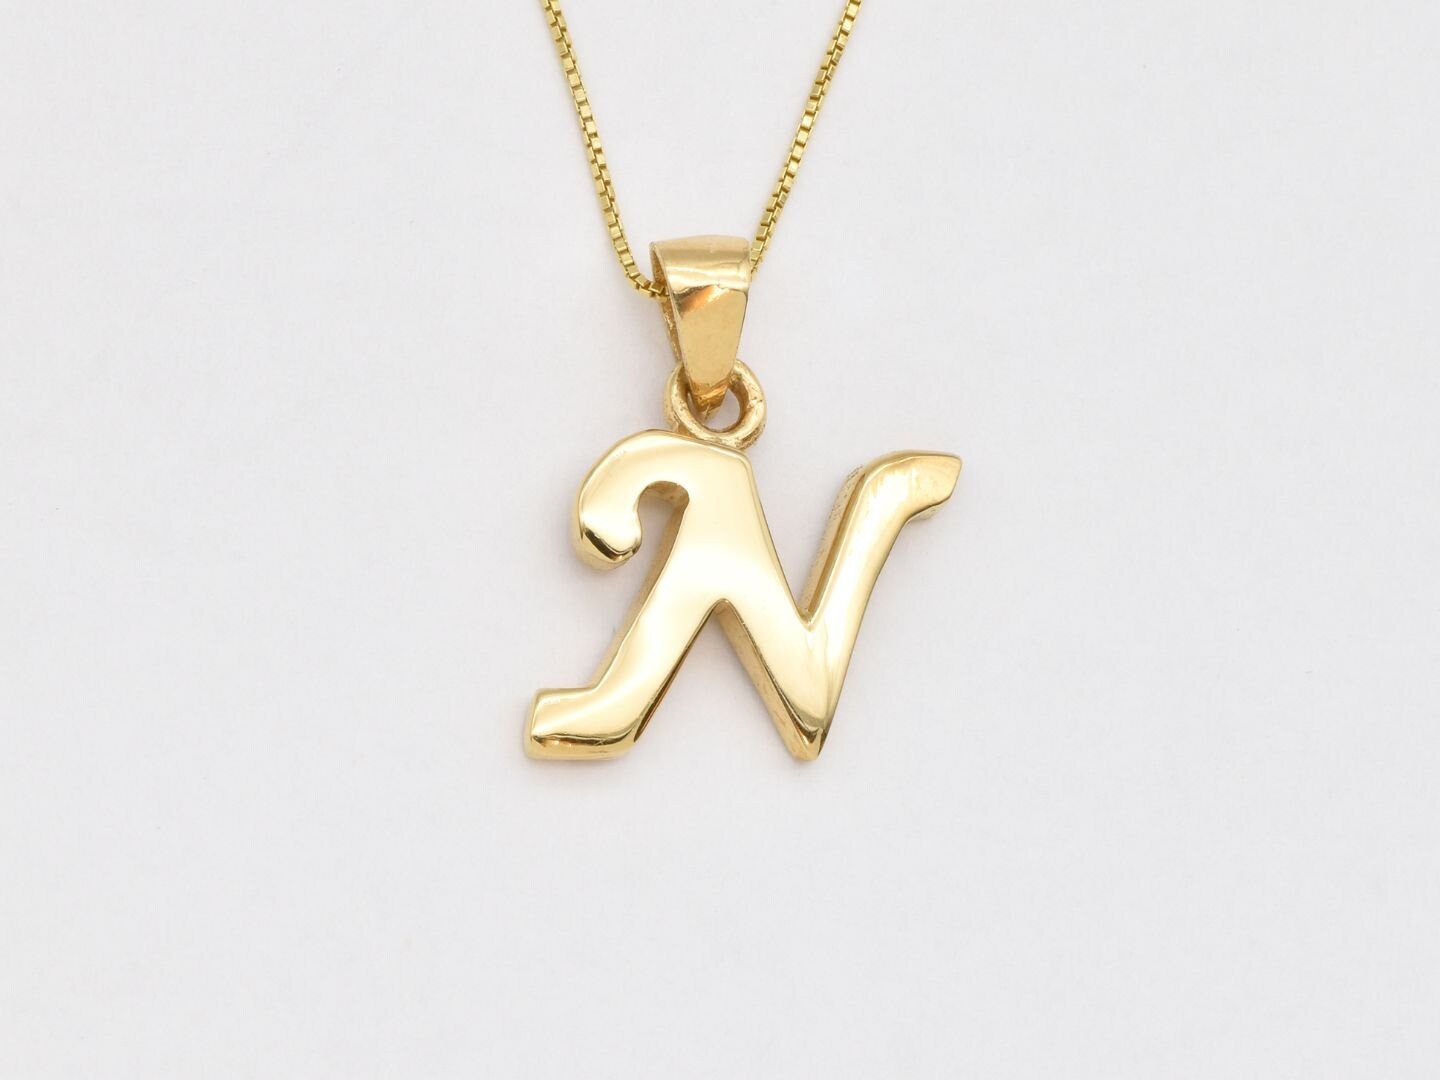 Gold Letter N Pendant - Alphabet Letter Necklace - Initial Letter N Pendant